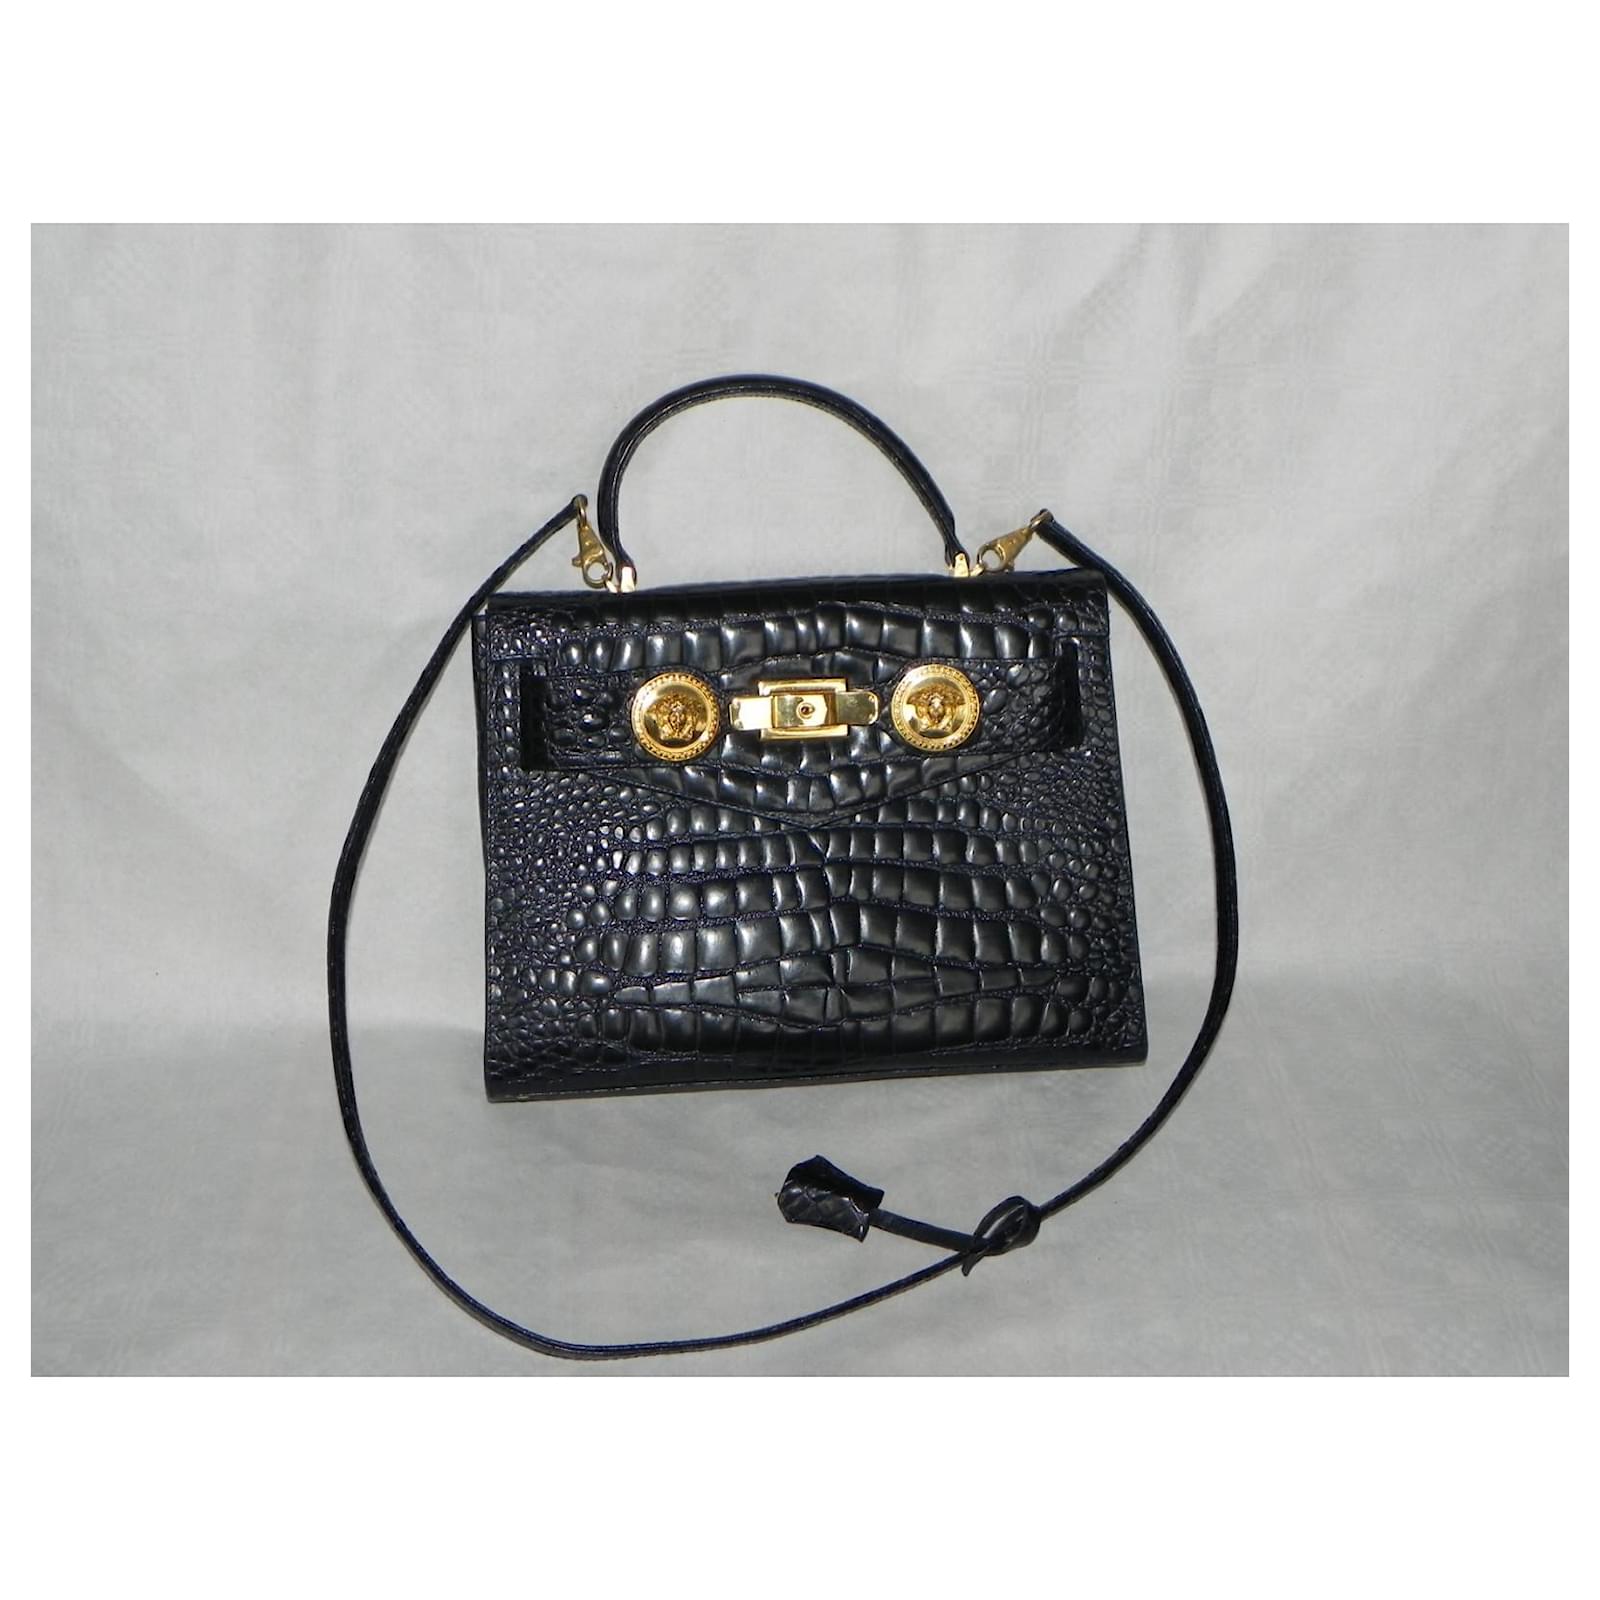 Rare Vintage GIANNI VERSACE Diana Handbag